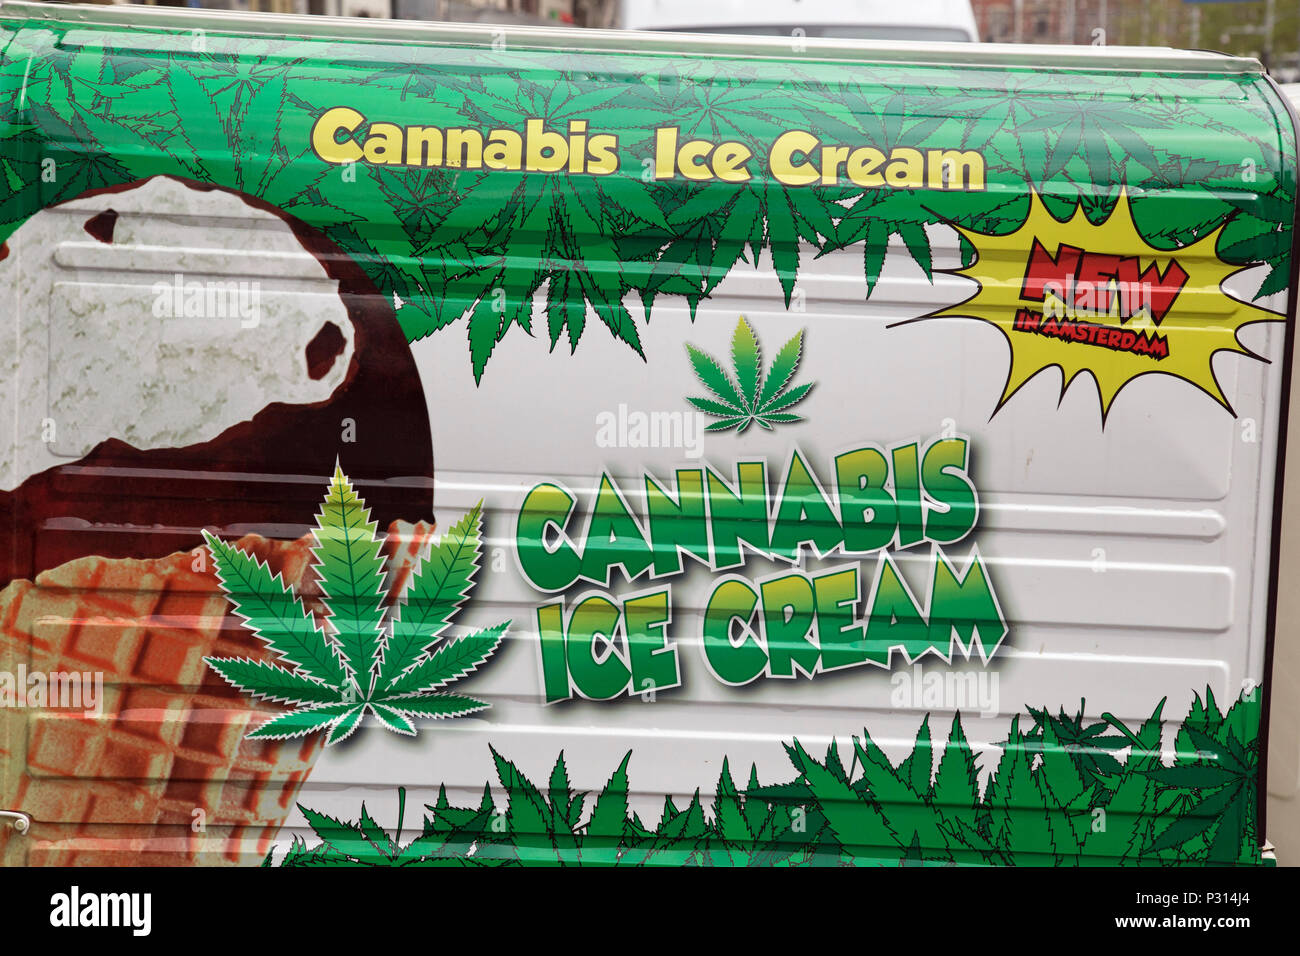 An Ice cream van advertises cannabis flavour Ice Cream Stock Photo